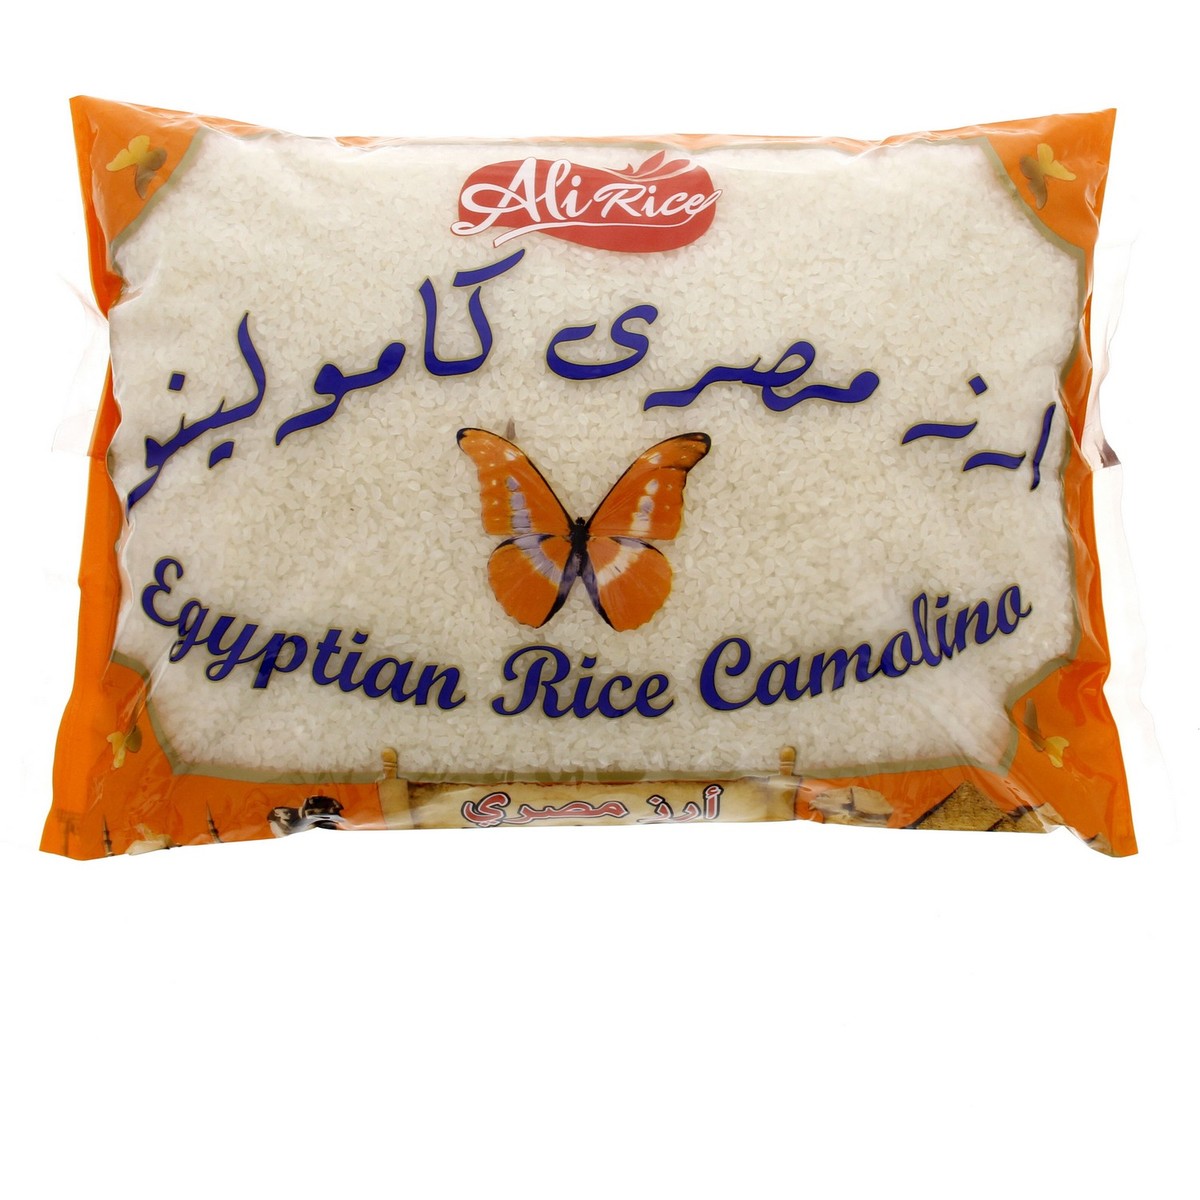 Ali Rice Egyptian Rice Camolina 5 kg